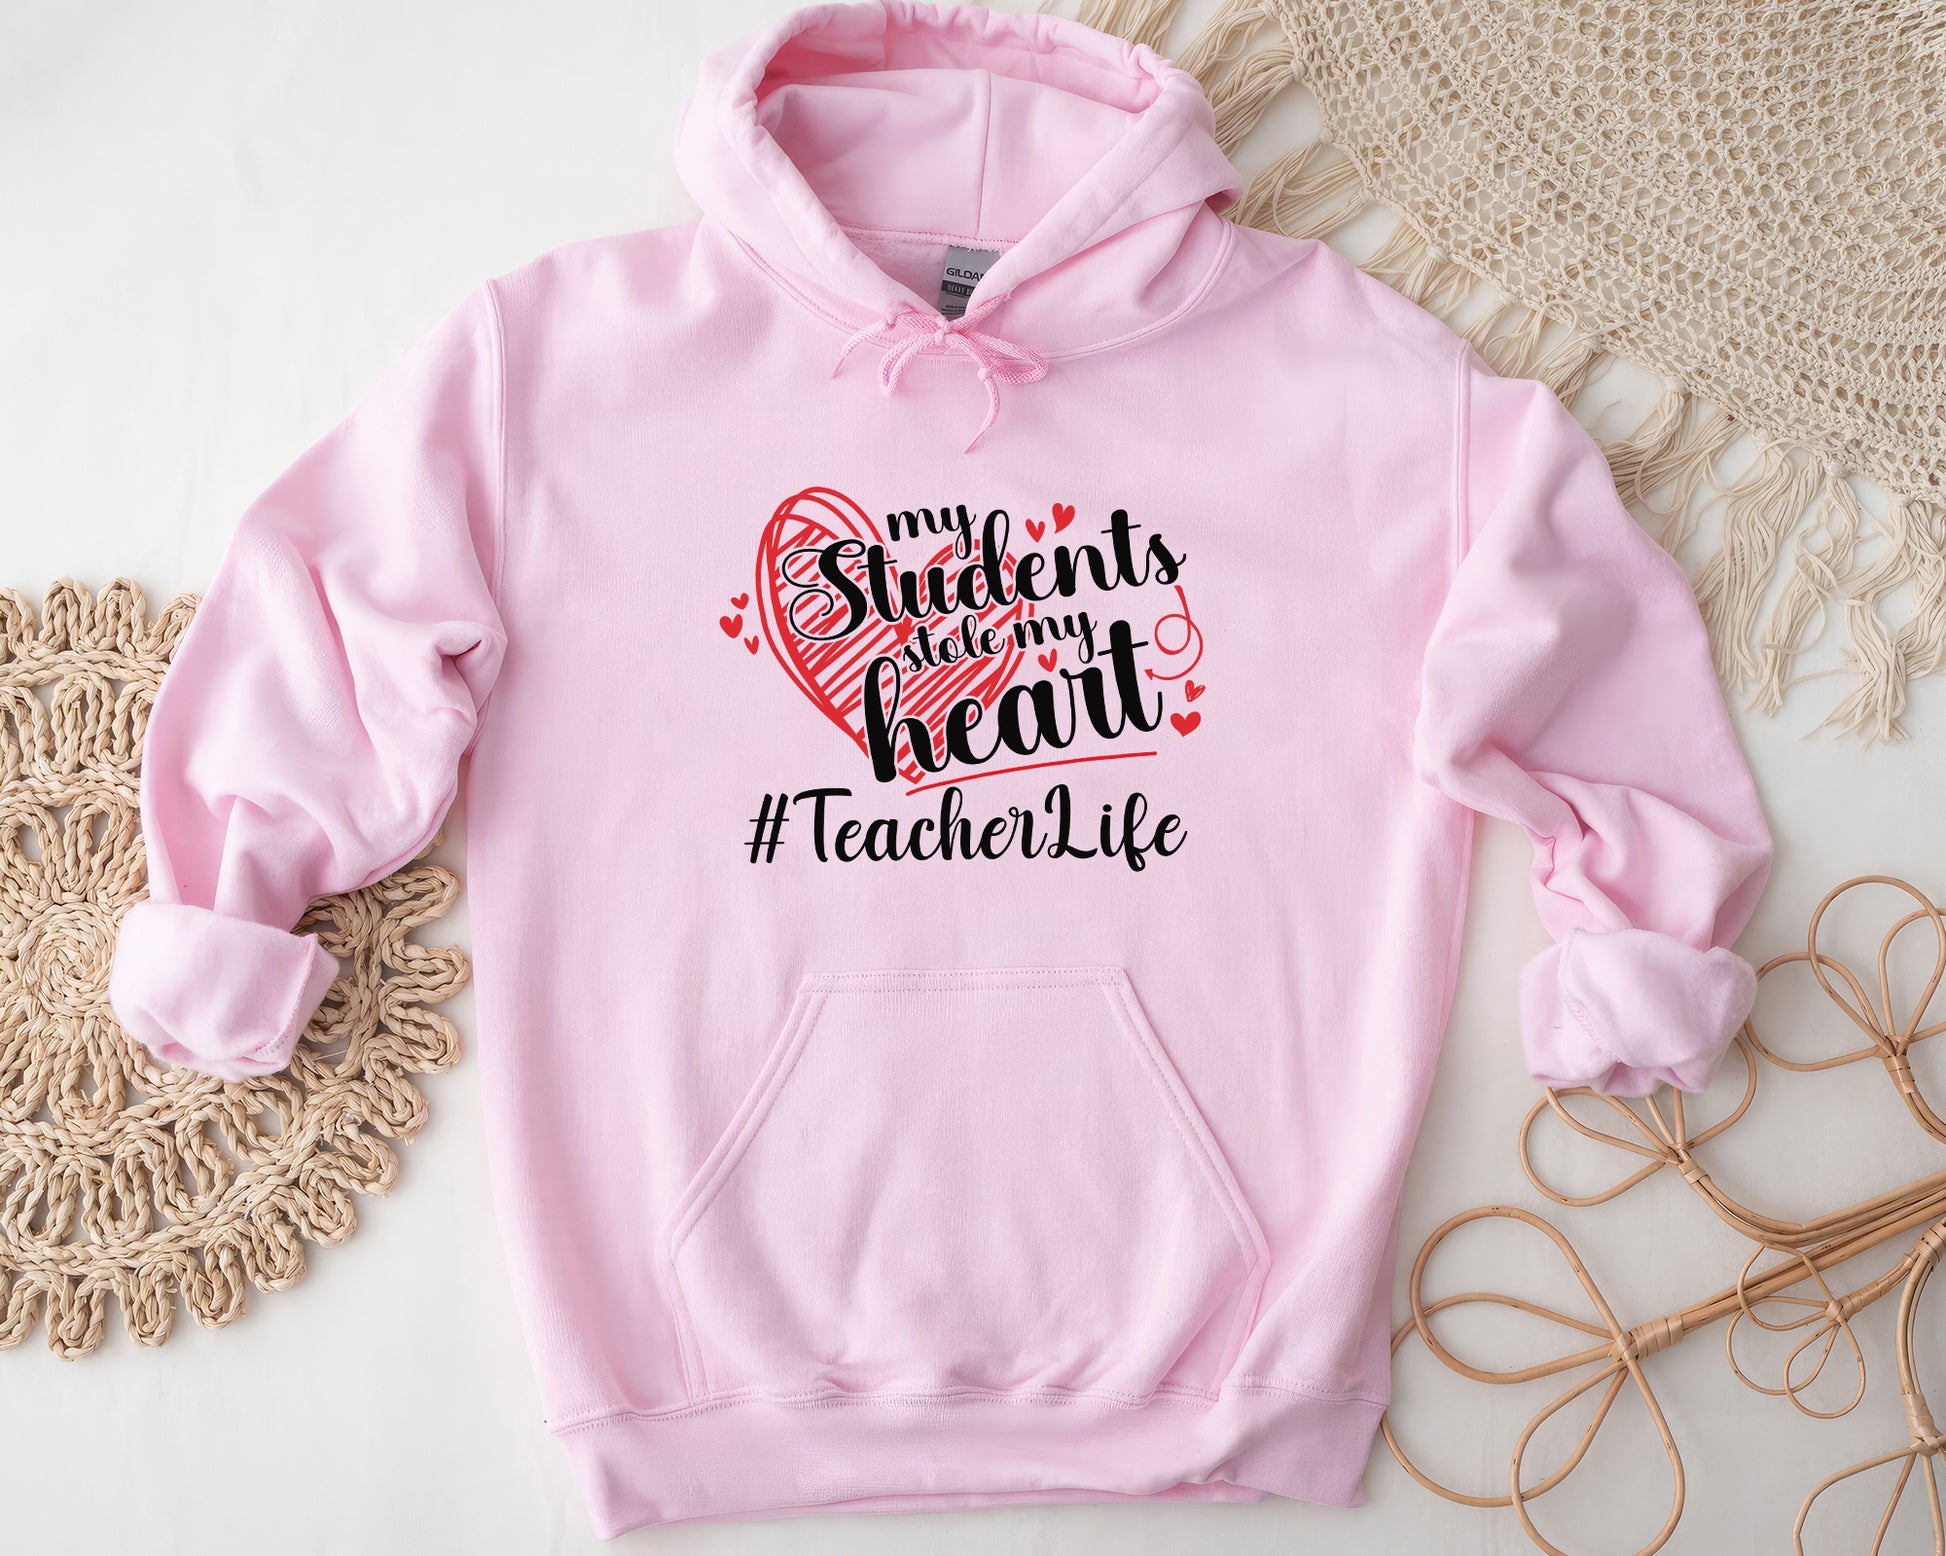 Tee Art Online - Valentine My Students Stole My Heart Teacher Life Personalized Hoodie | Valentine's Day Kawaii Cute | Education Teacher Design - Pink